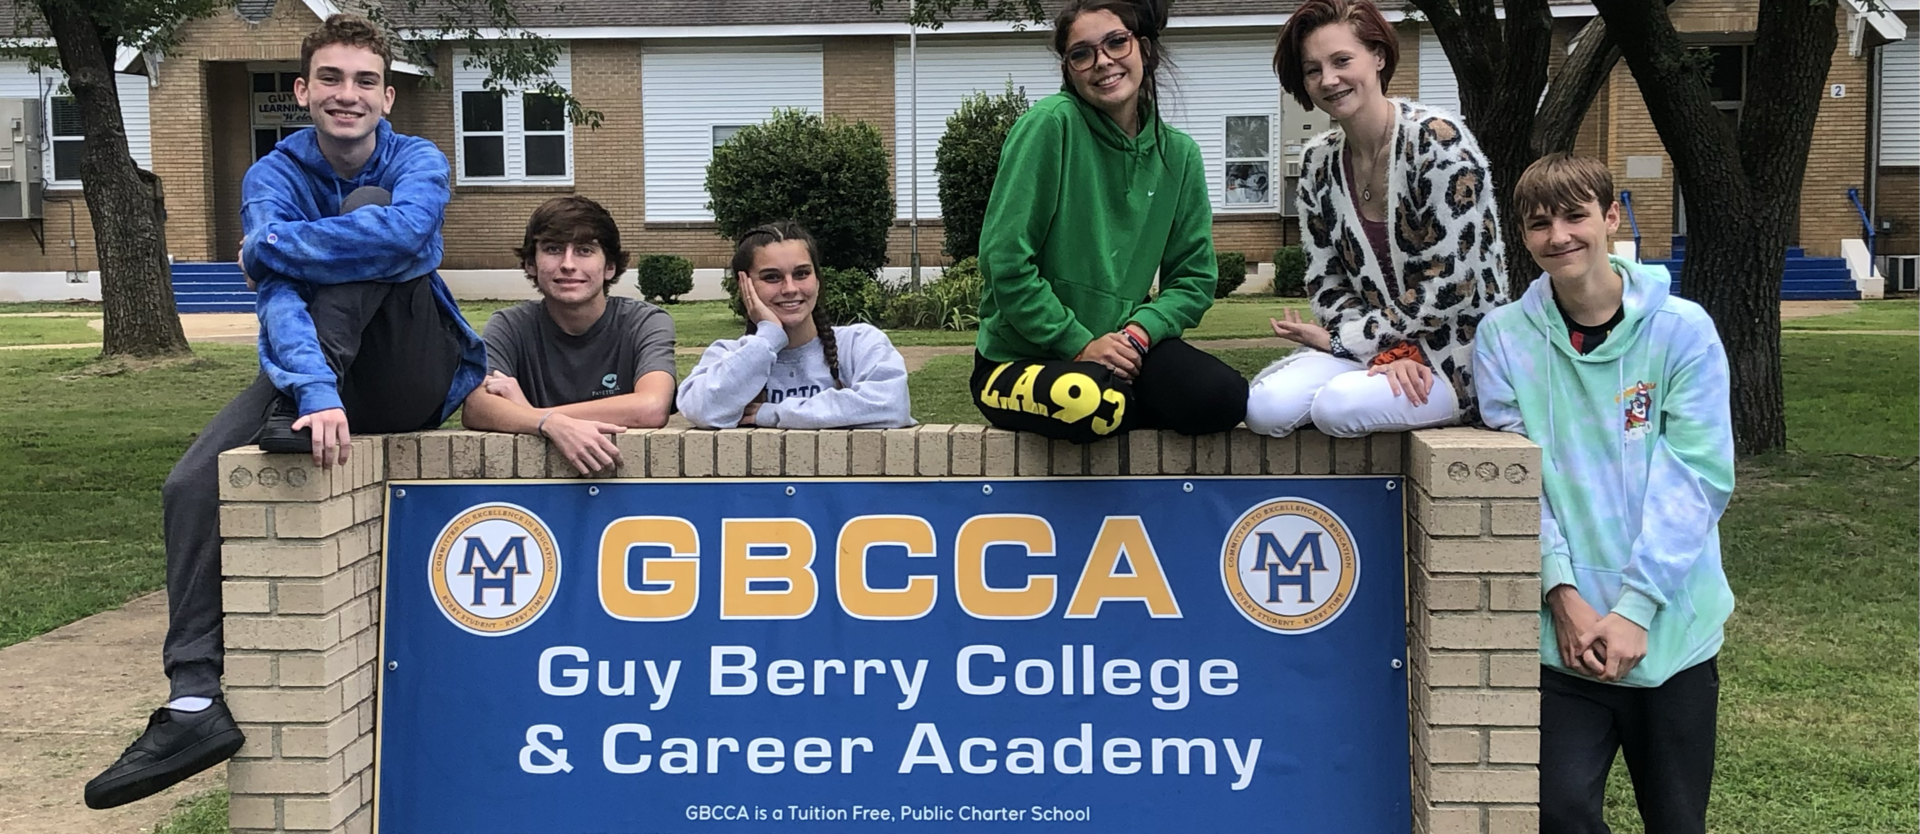 Guy Berry College & Career Academy